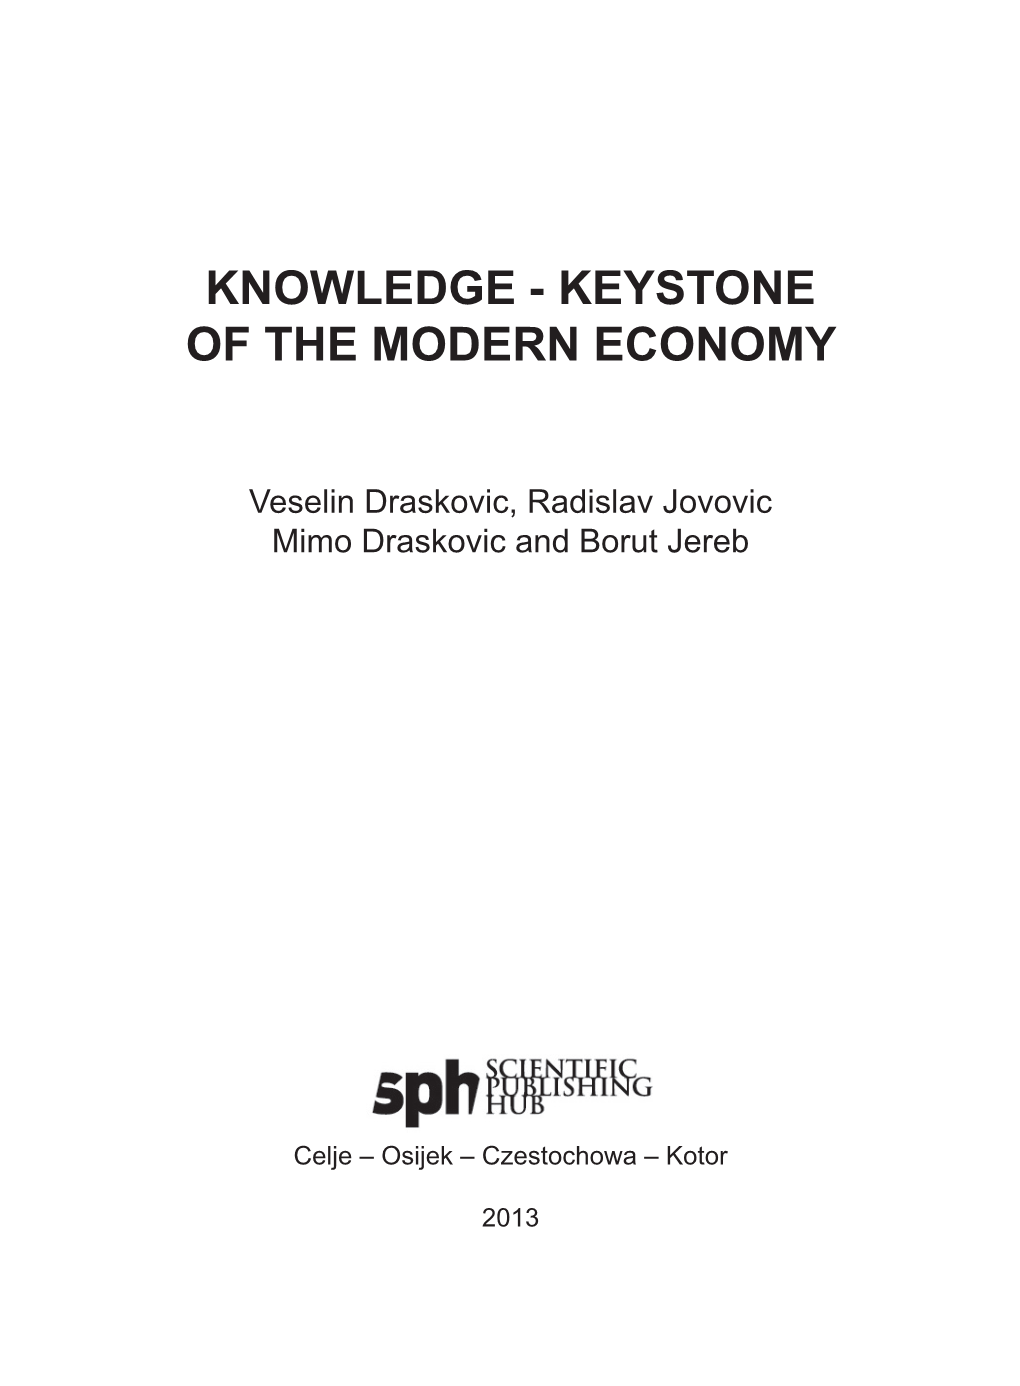 Knowledge - Keystone of the Modern Economy